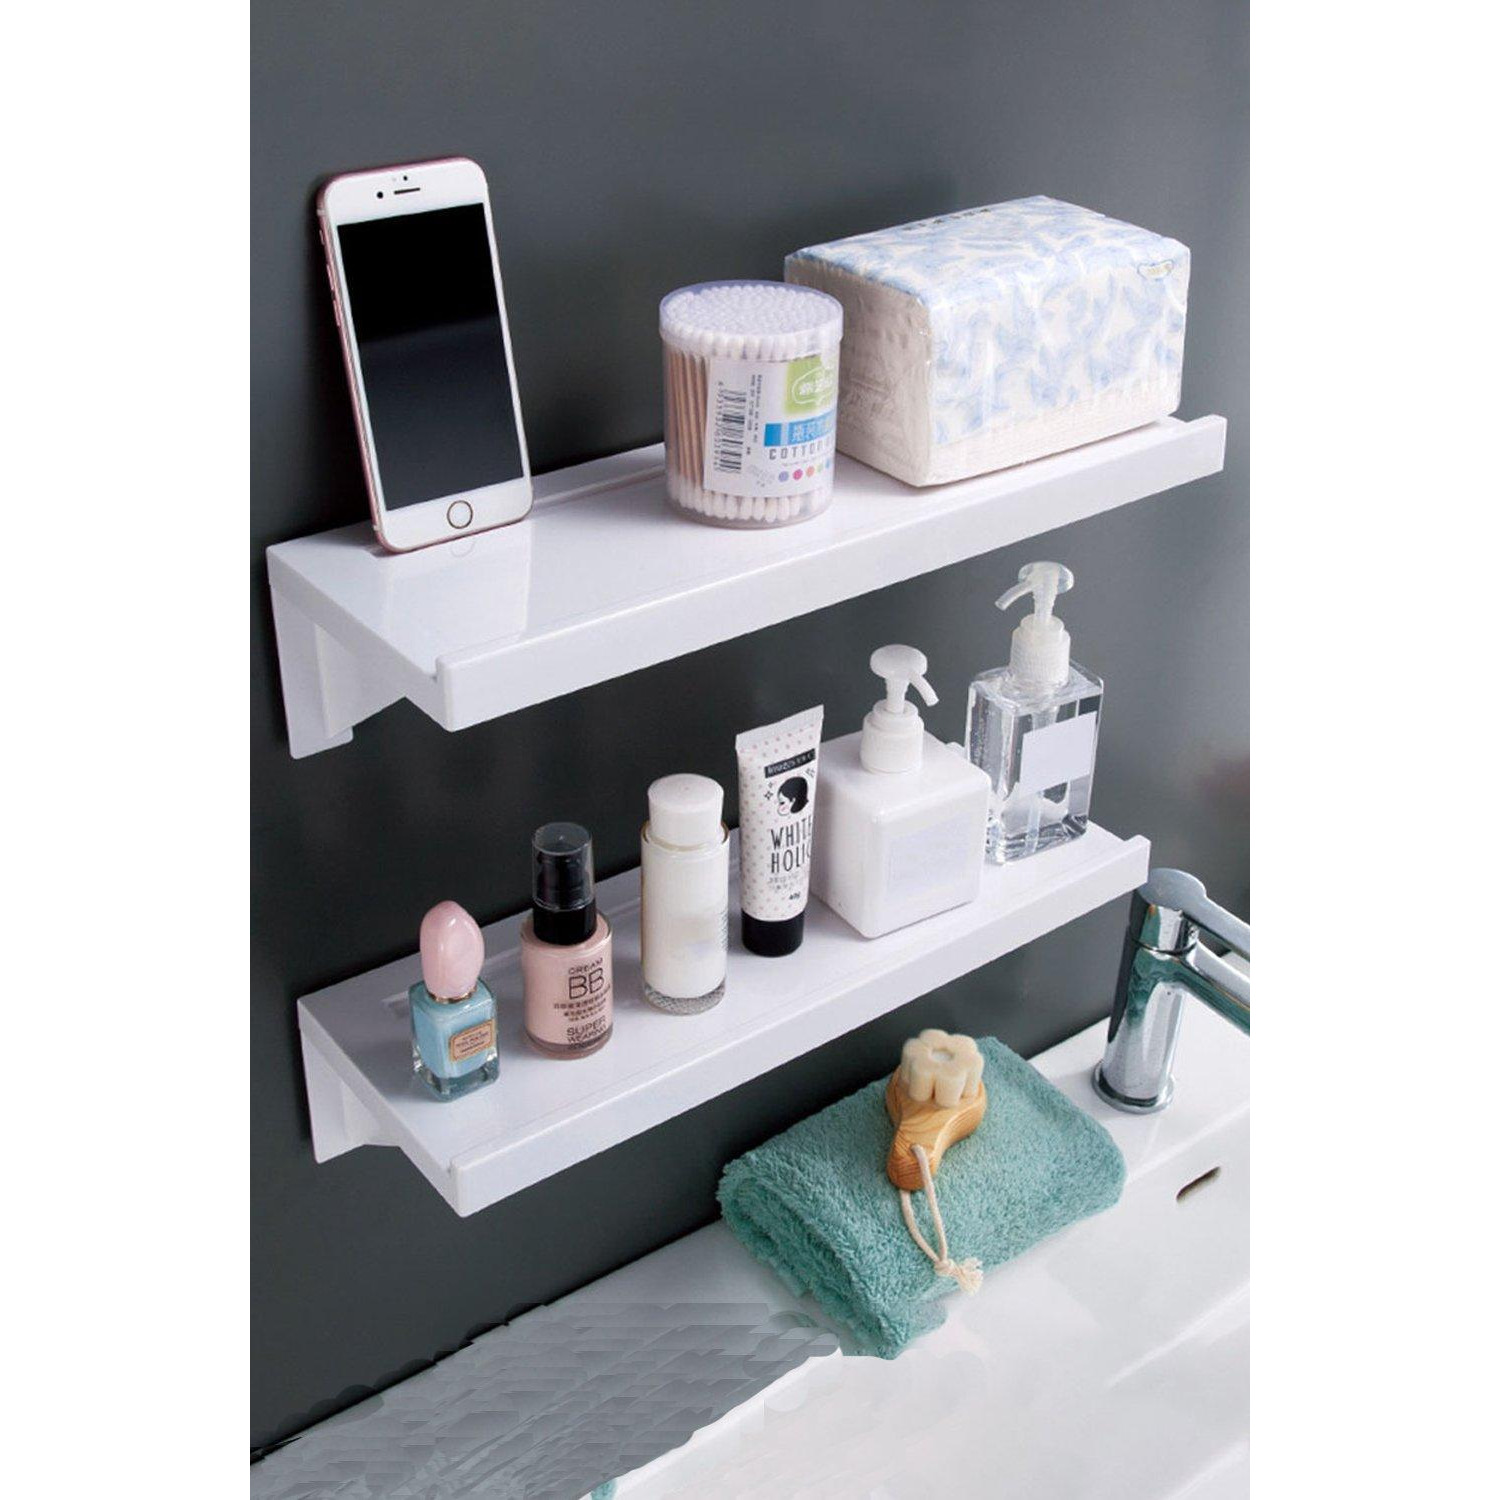 Self-Adhesive Corner Shelf Waterproof Shower Rack No Punching with Fixed Groove for Phone - image 1